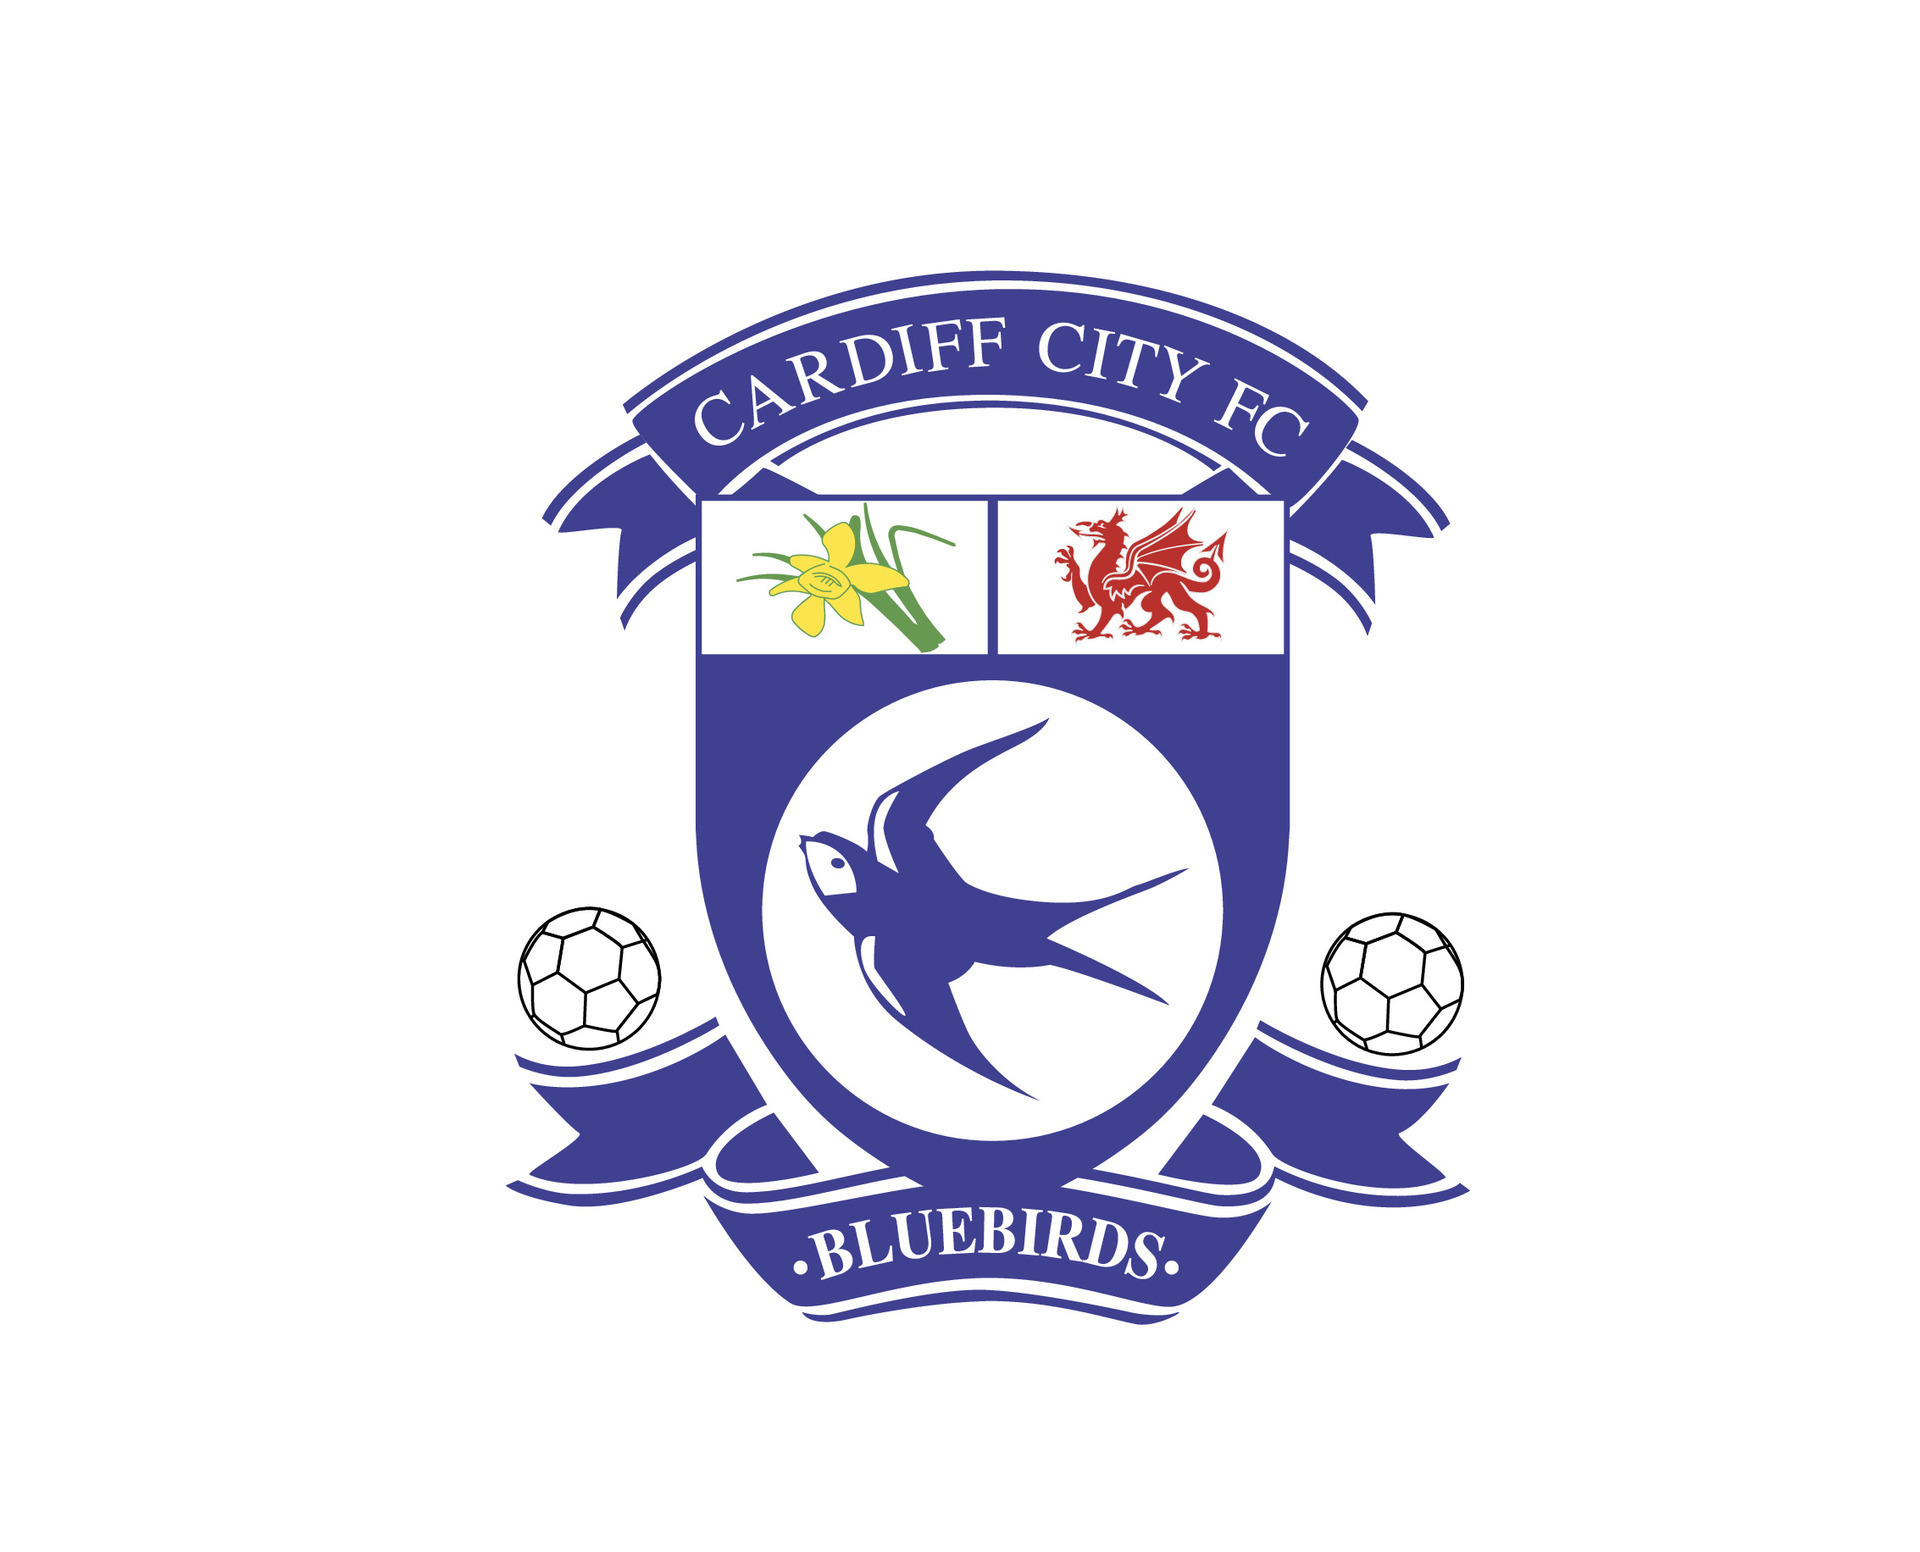 Cardiff City Football Club, UK League